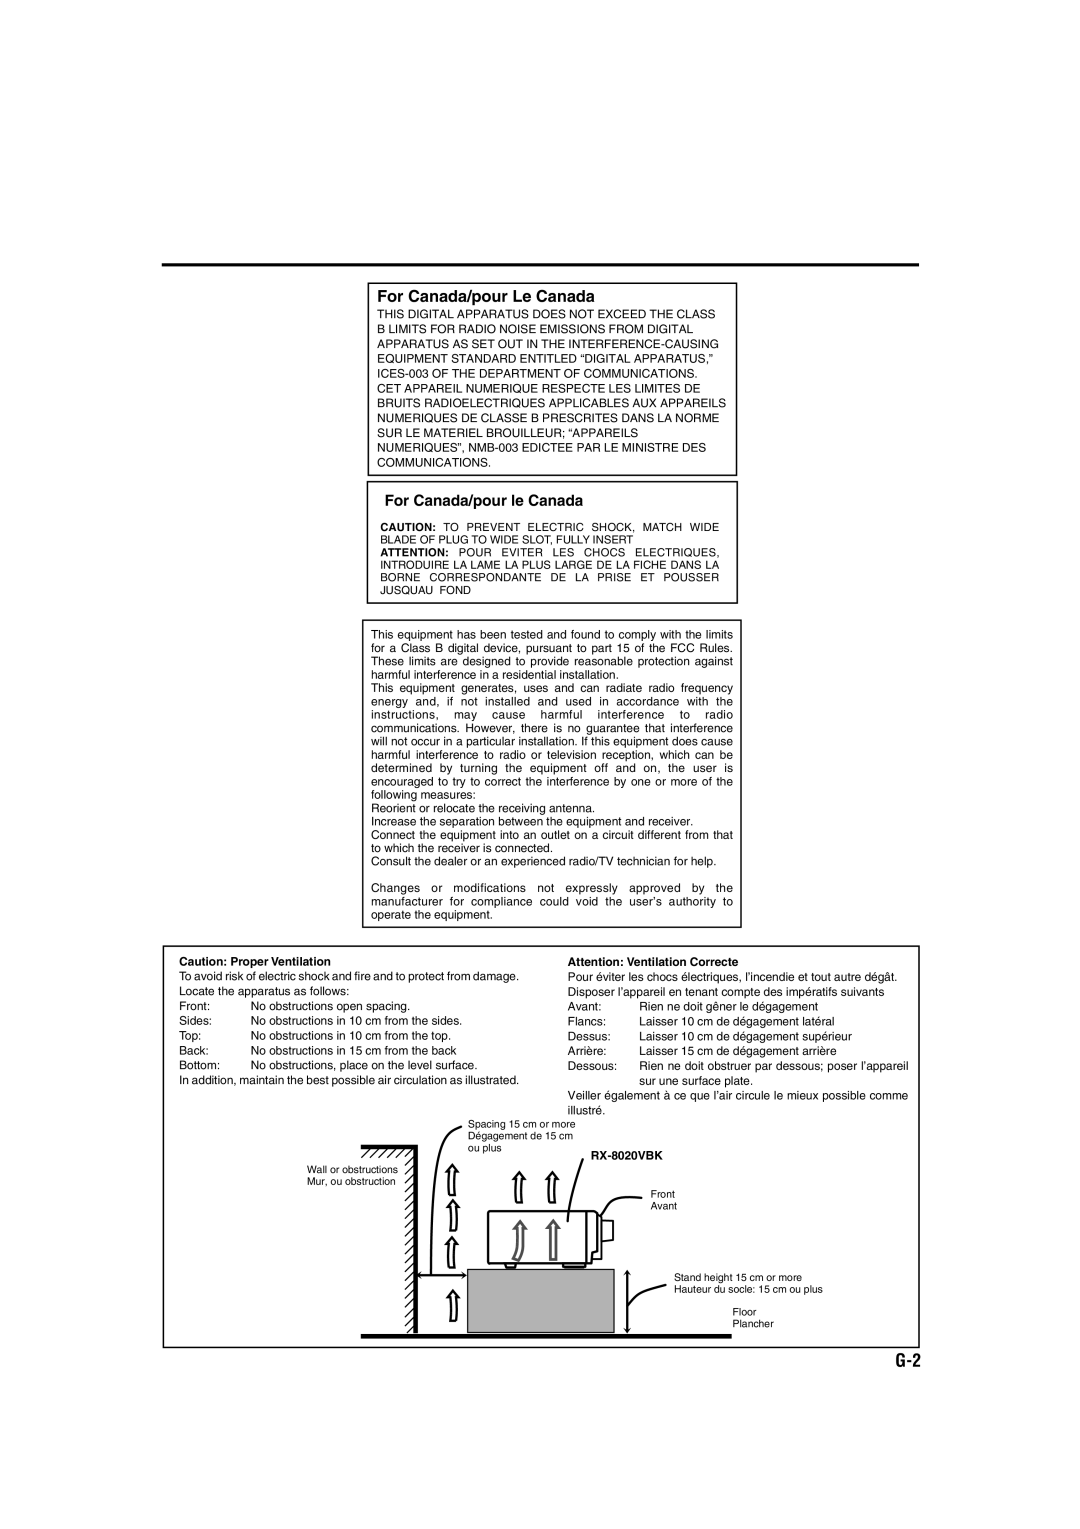 JVC RX-8020VBK manual For Canada/pour Le Canada, For Canada/pour le Canada, Caution Proper Ventilation 